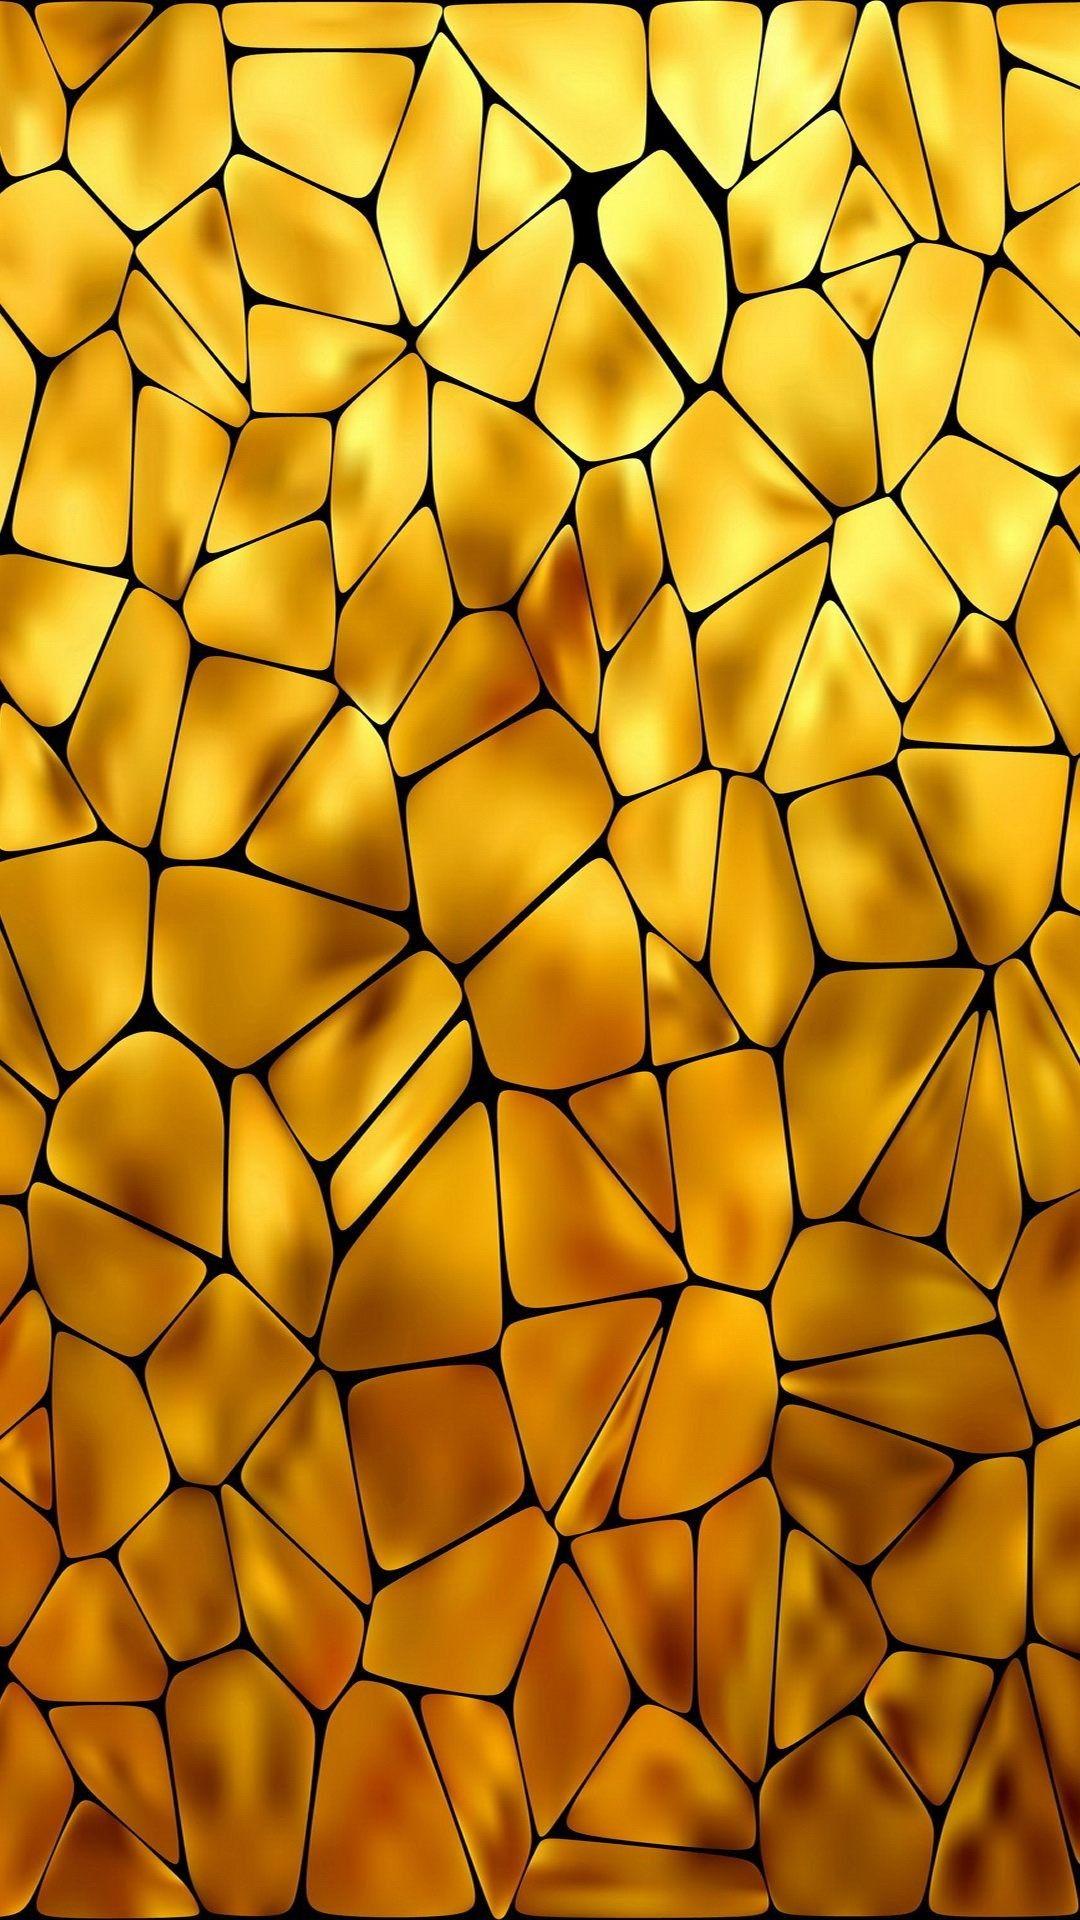 Abstract Golden Mosaic iPhone 6 Plus Wallpaper